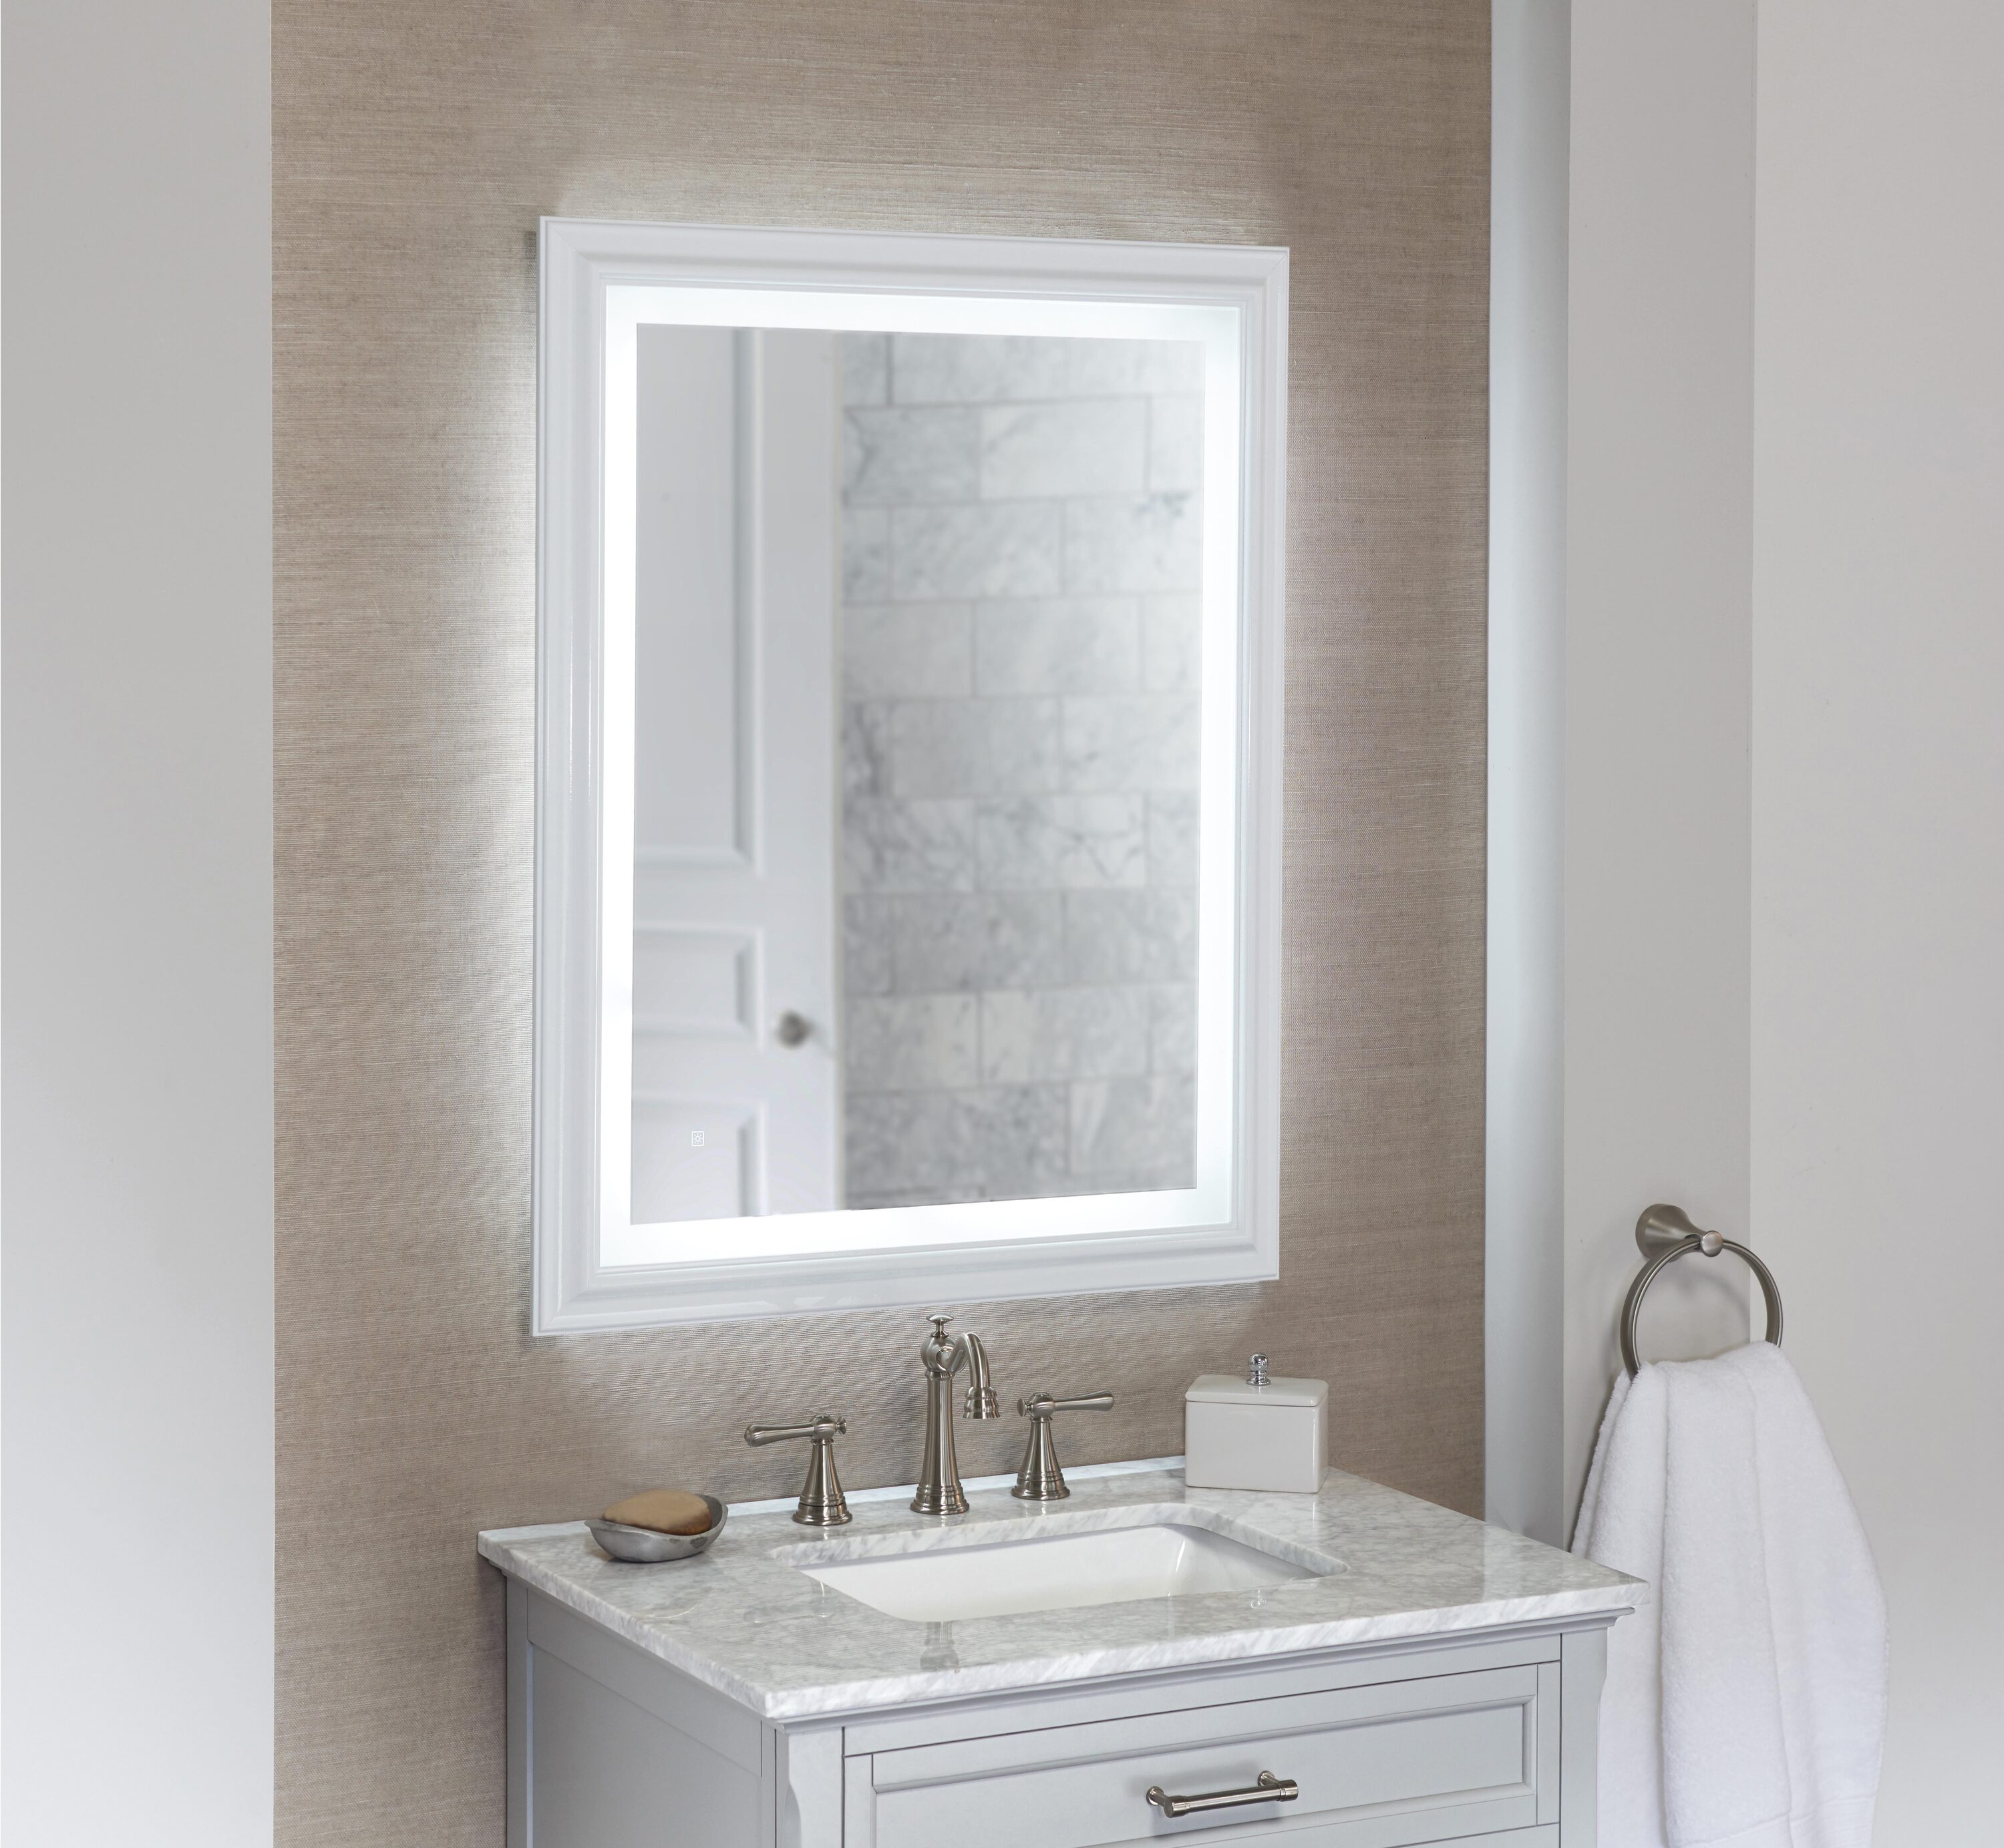 LED Light Mirror Bathroom Mirror 2712 with Mirror Heating & Warm